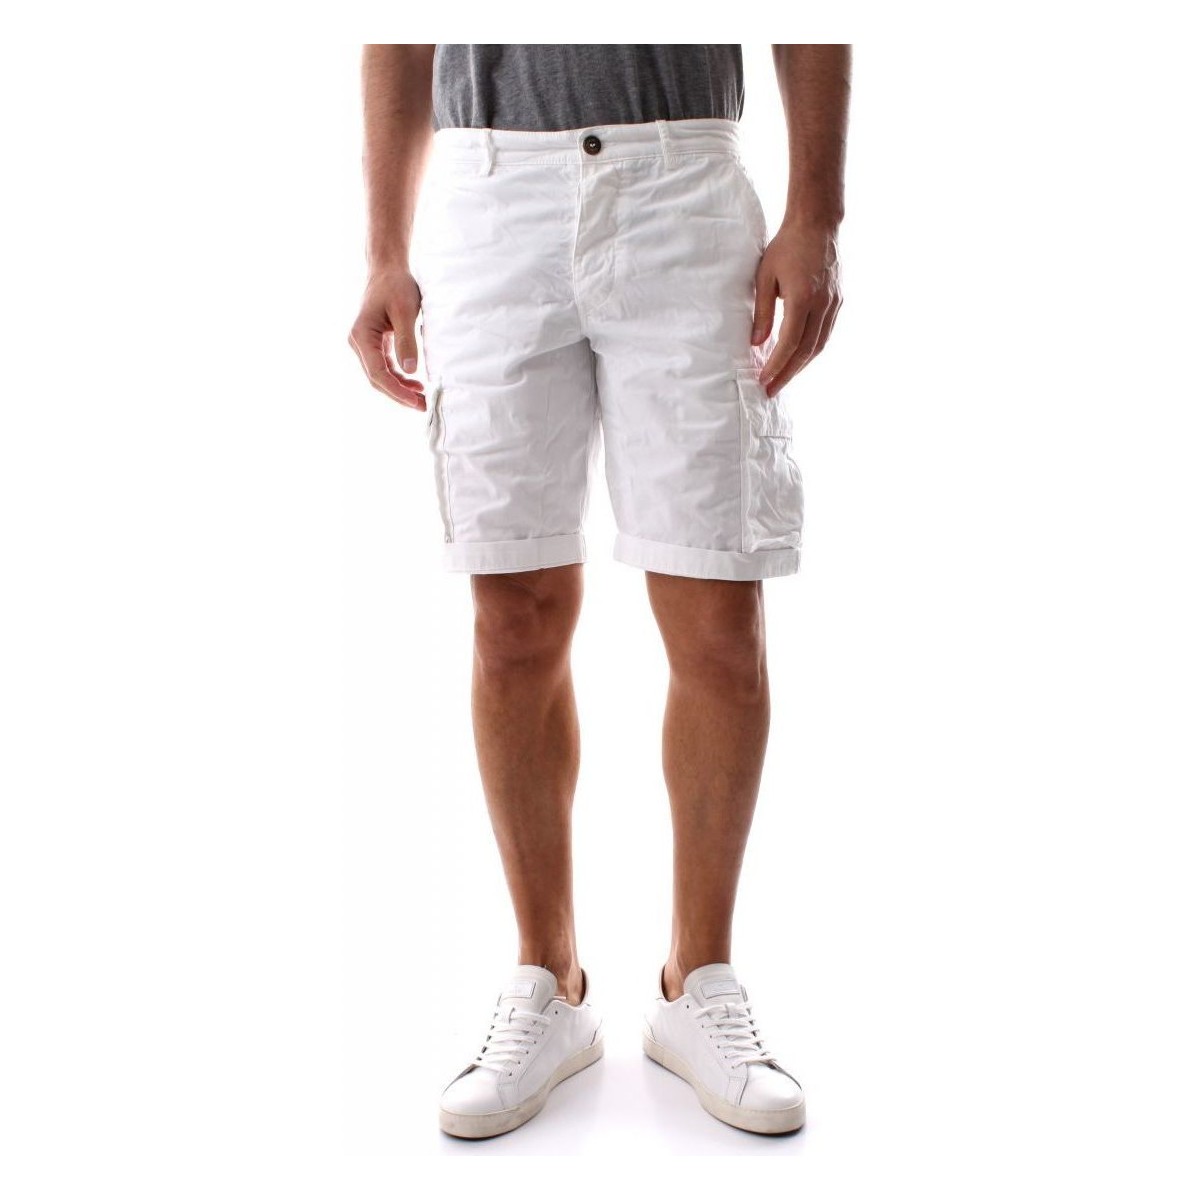 Textil Homem Shorts / Bermudas 40weft NICK 6013/6874-40W441 WHITE Branco